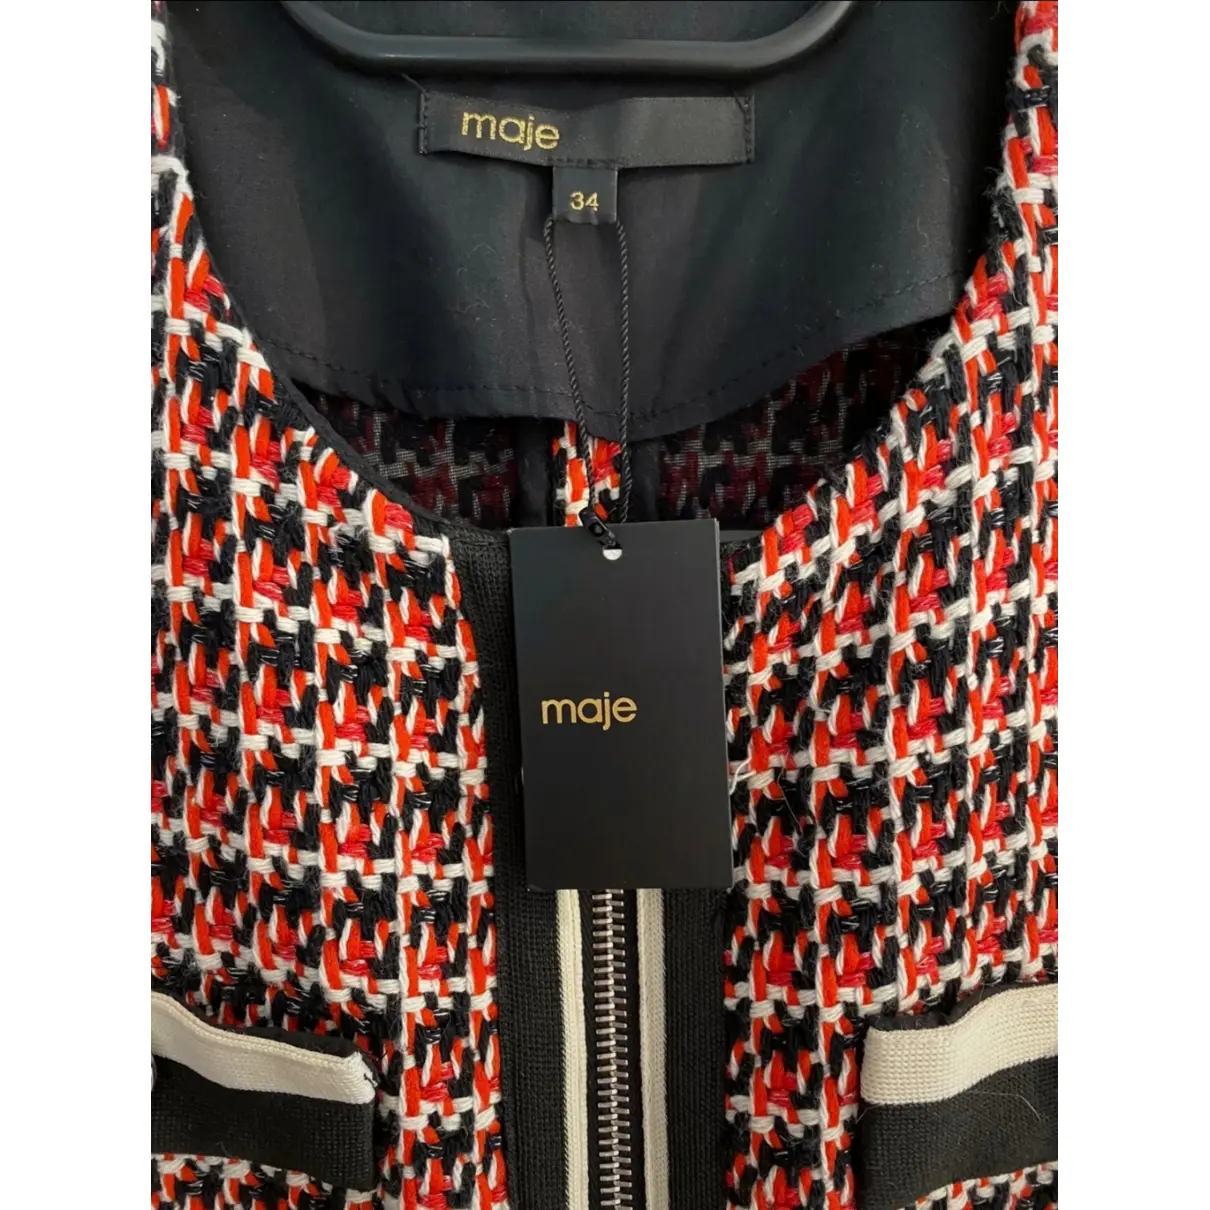 Buy Maje Spring Summer 2021 tweed mid-length dress online